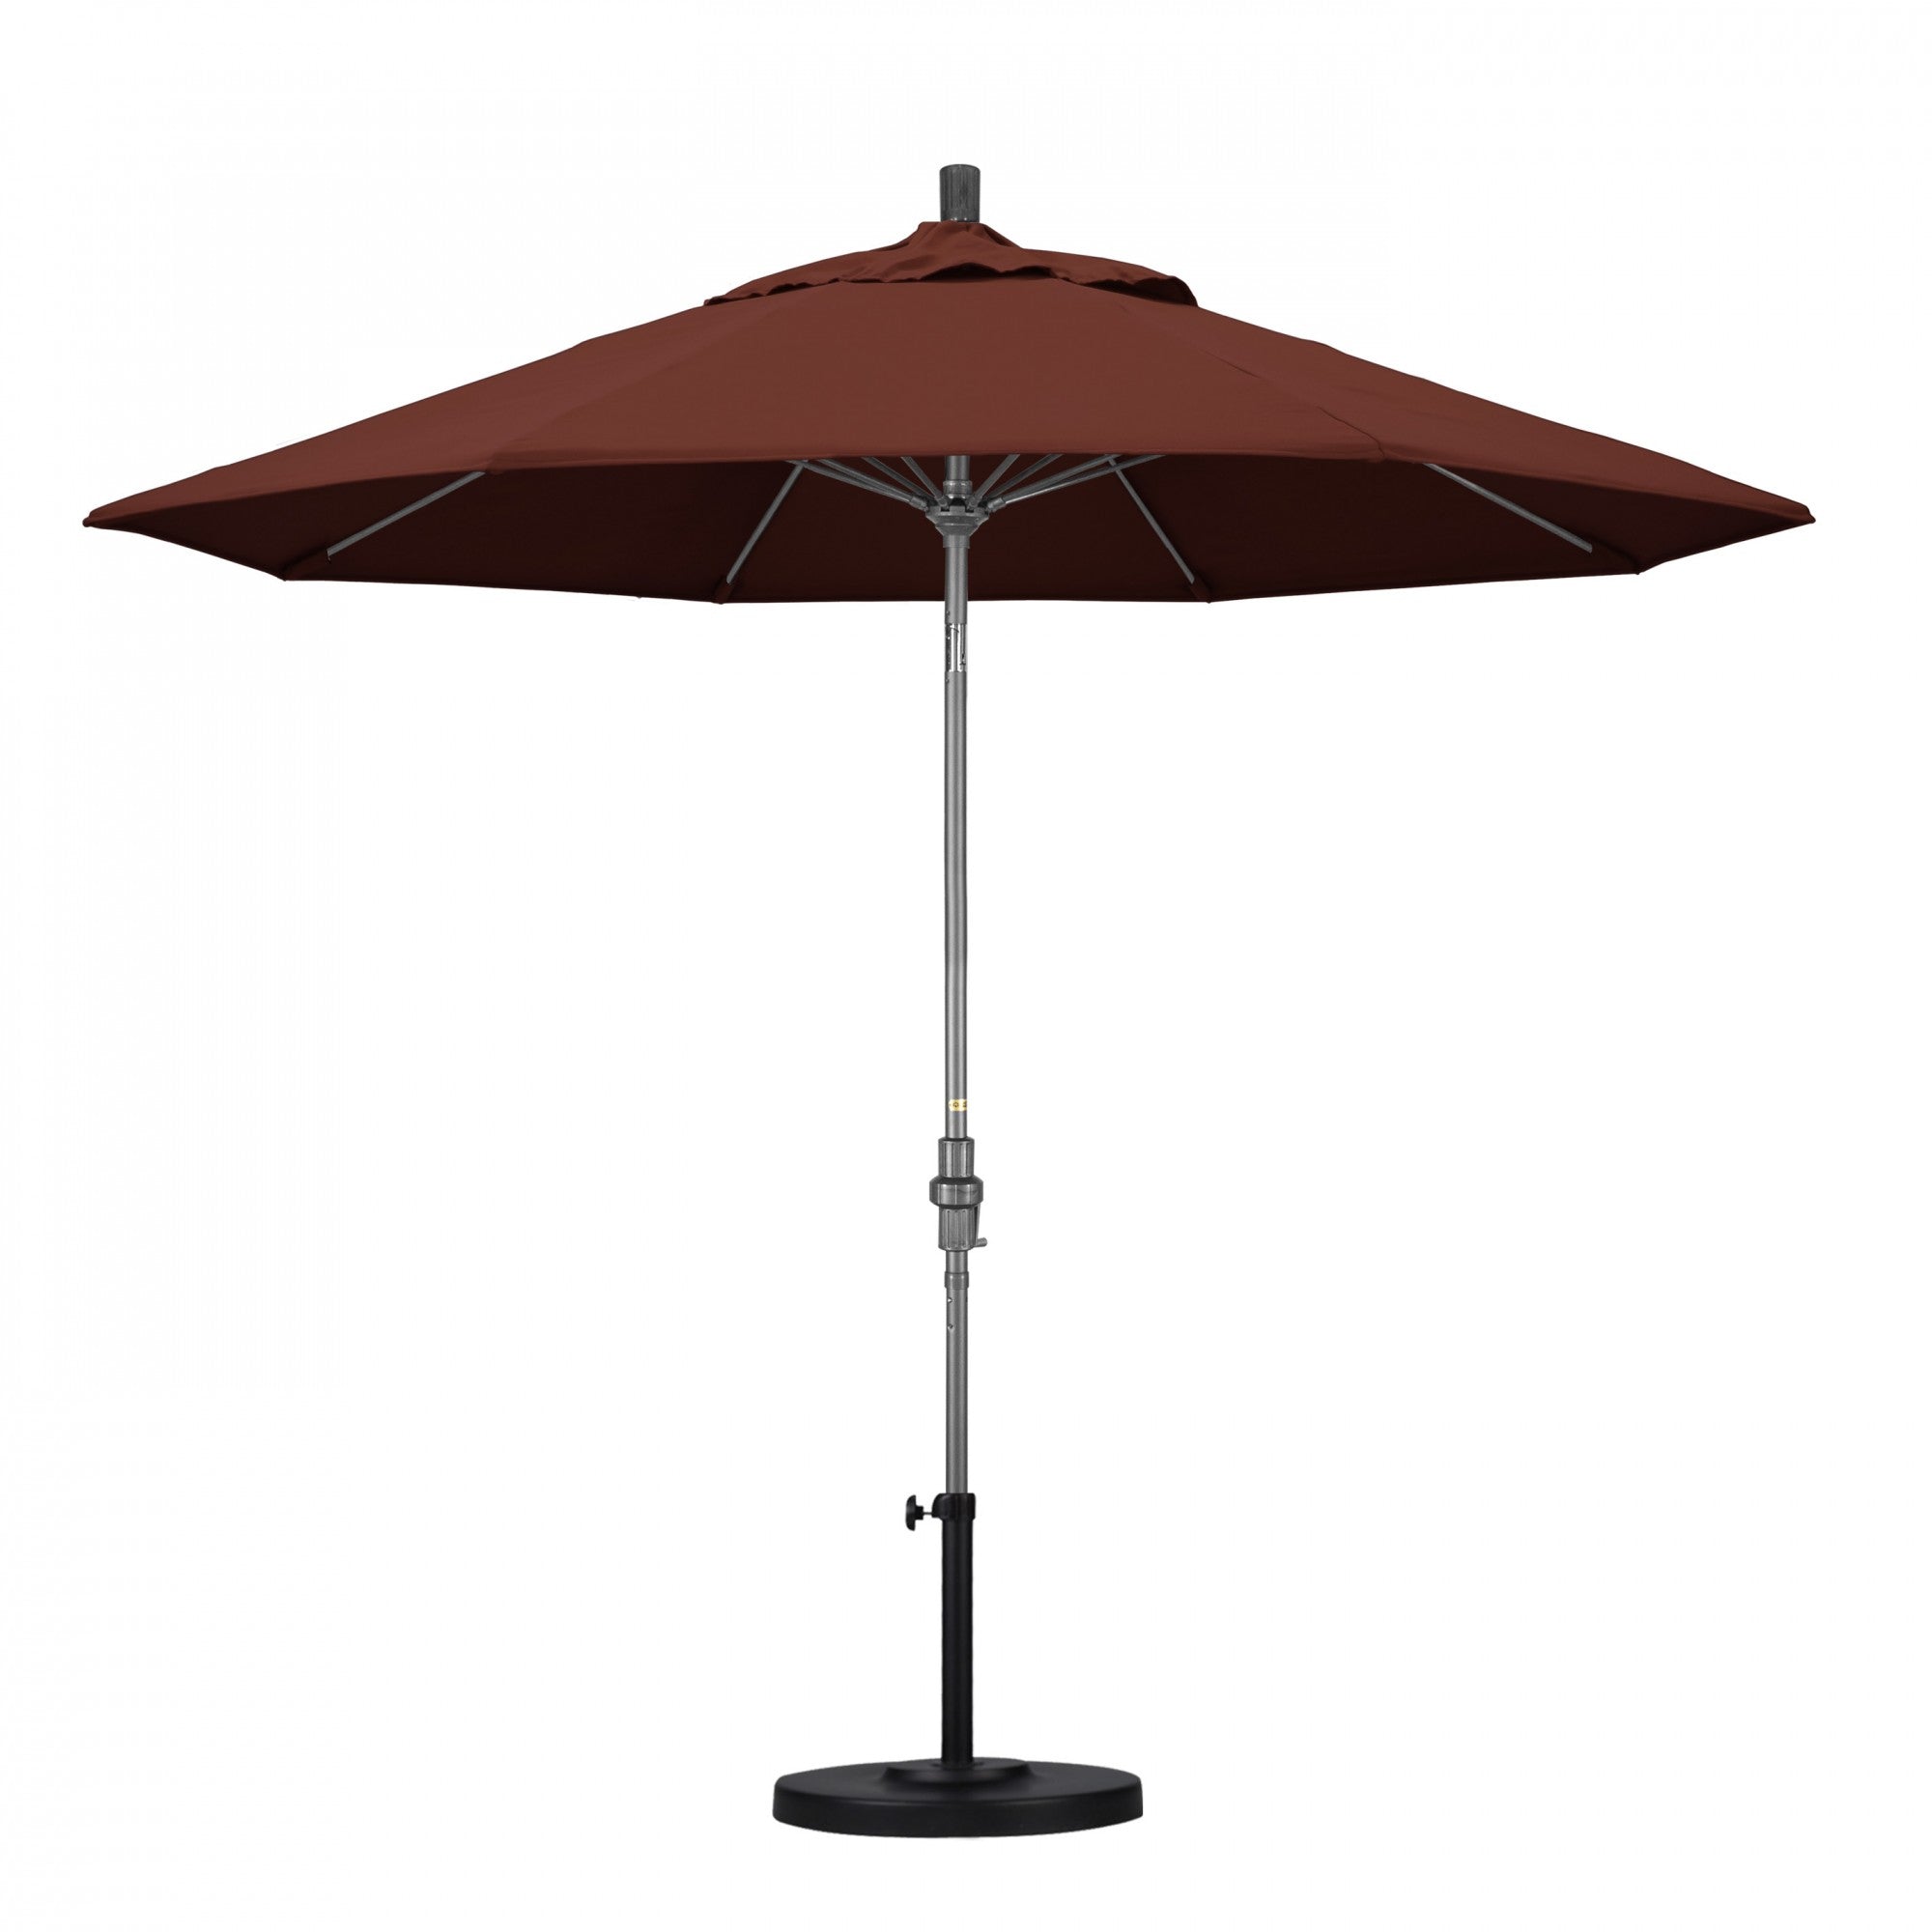 California Umbrella - 9' - Patio Umbrella Umbrella - Aluminum Pole - Henna - Sunbrella  - GSCUF908010-5407